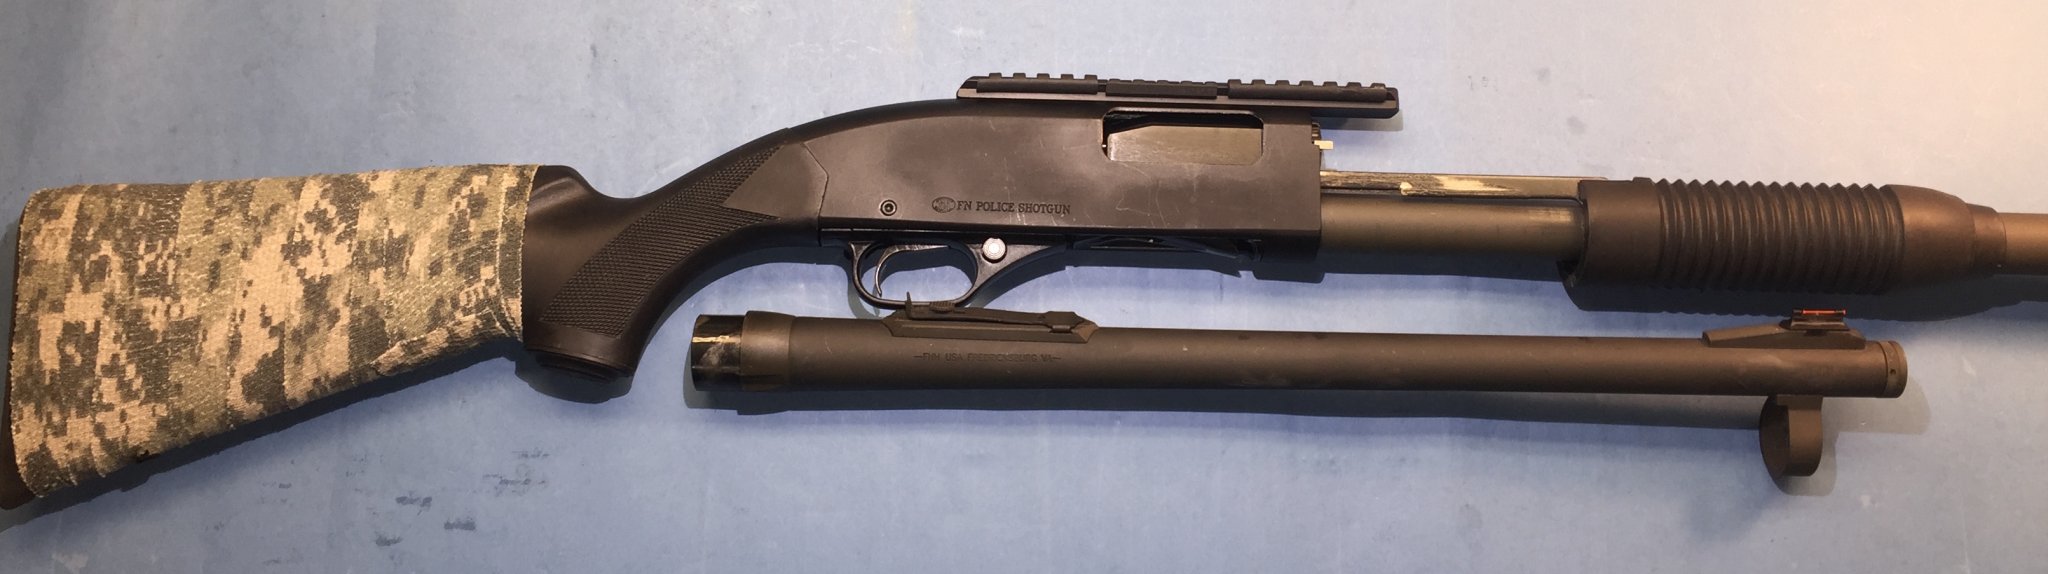 IMG_7252 Herstal FN Police Winchester 1300 Shotgun Adjustable Choke Tubes copy.JPG